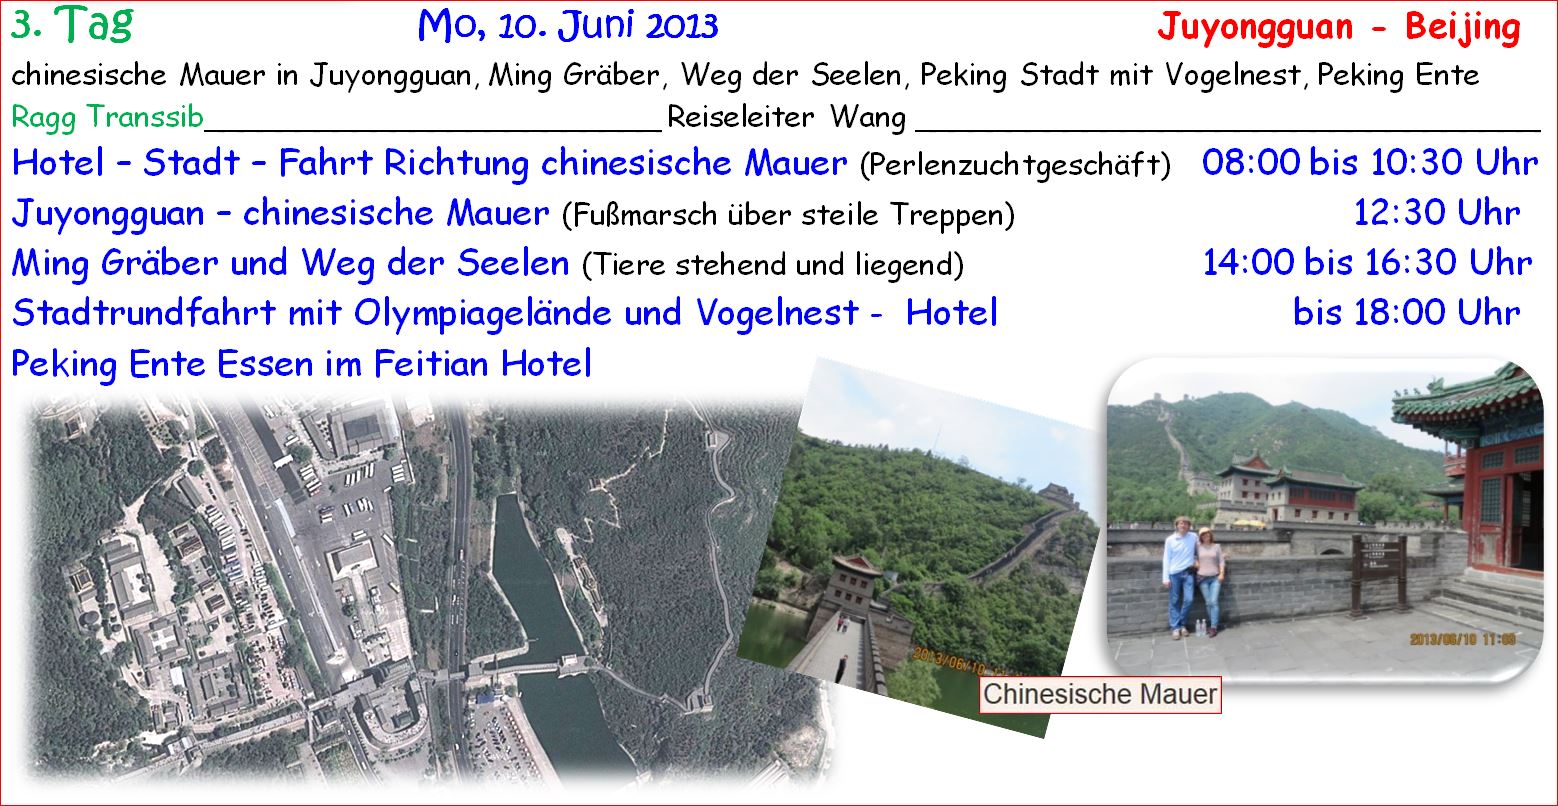 ragg 2013-06-10 - 1110Aweb - Transsib - Chinesische Mauer-Ming Gräber - Tag 03 - S06 B01